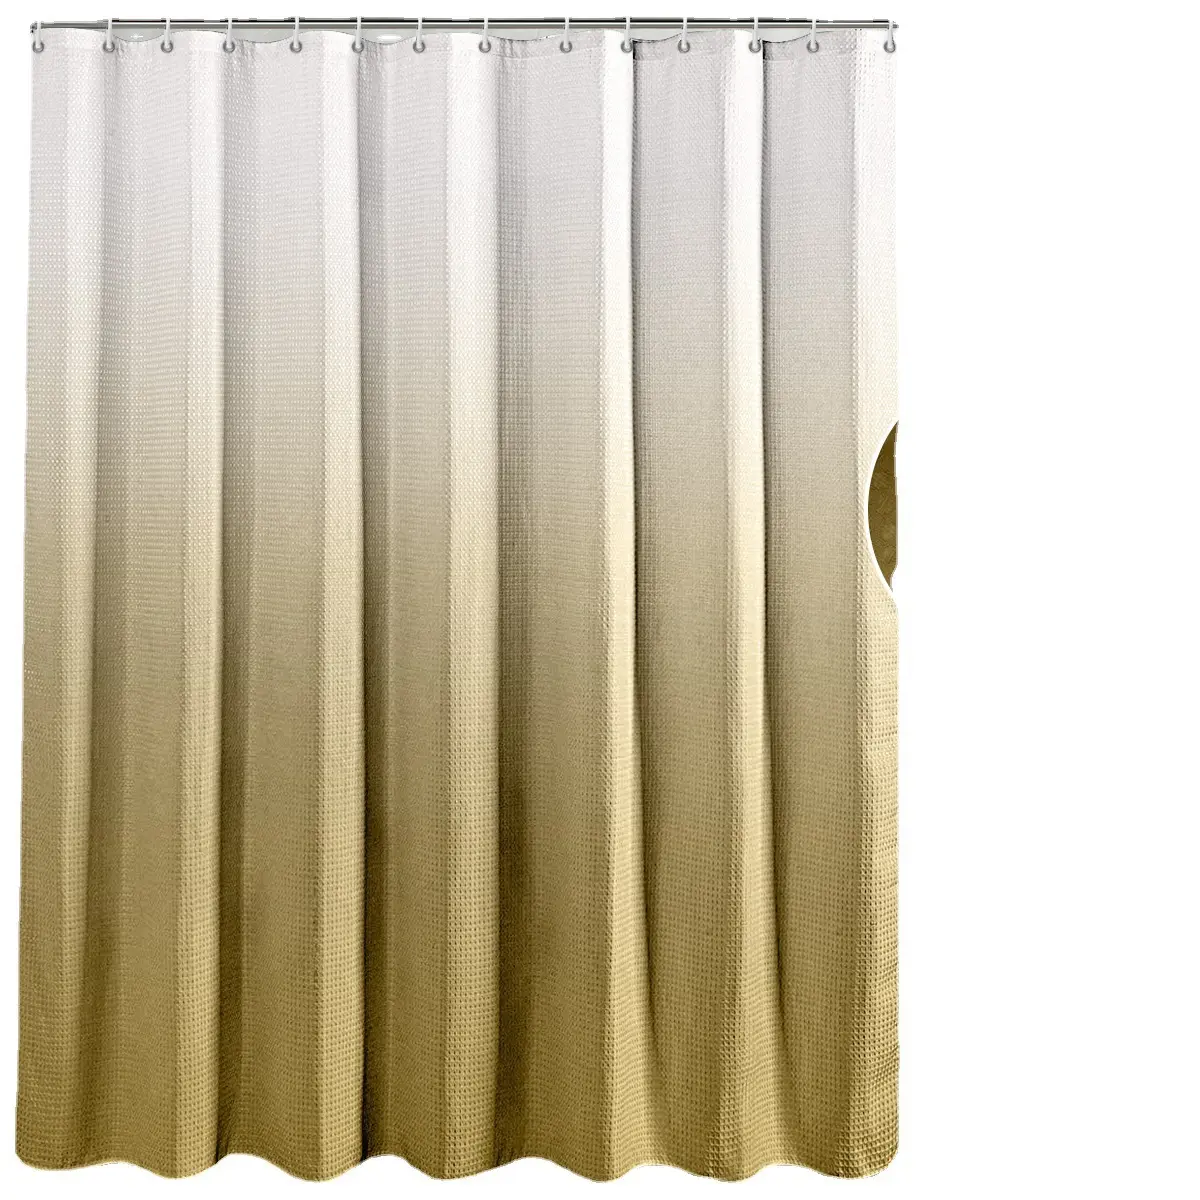 Heavy duty fabric shower curtains 72 x 72 Inches hotel quality bathroom shower curtains